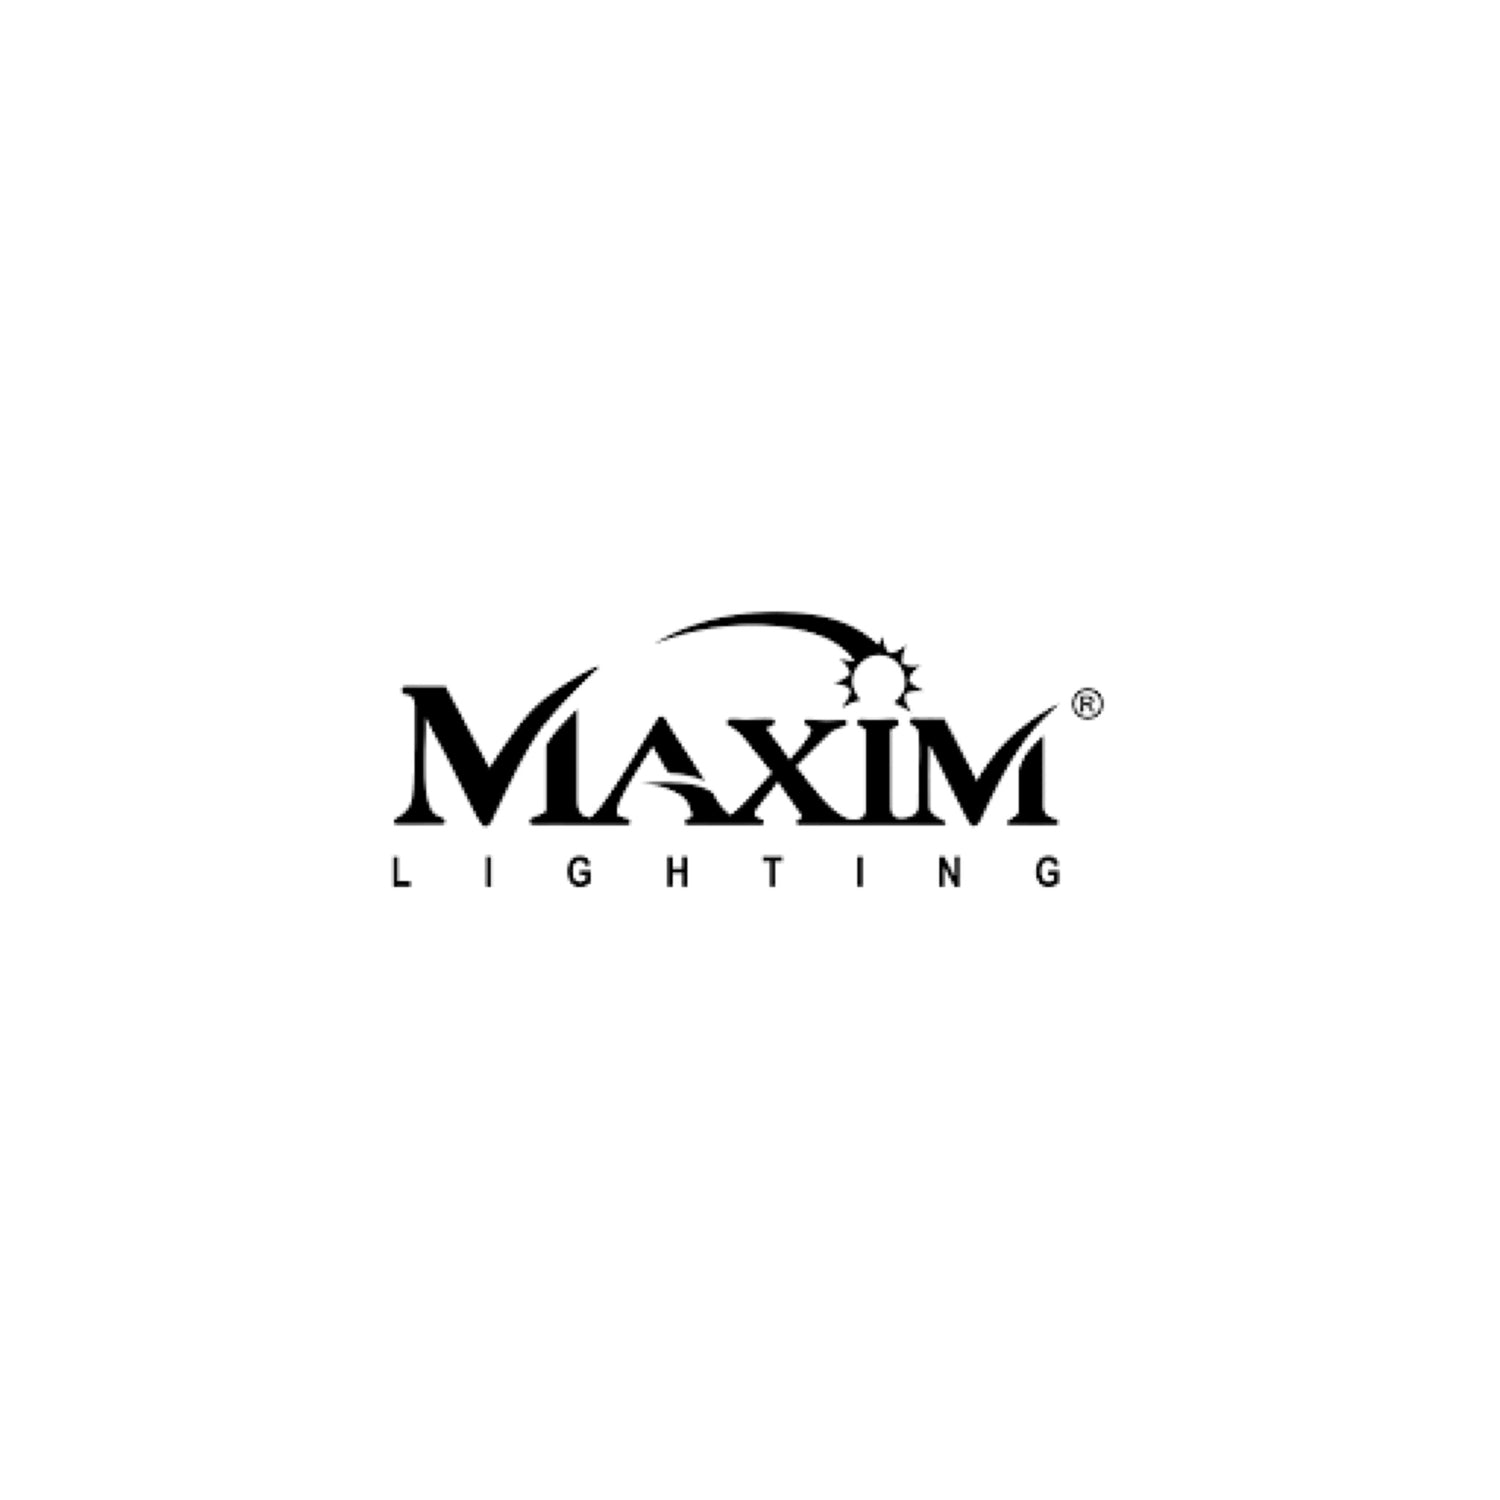 MAXIM LIGHTING INTERNATIONAL